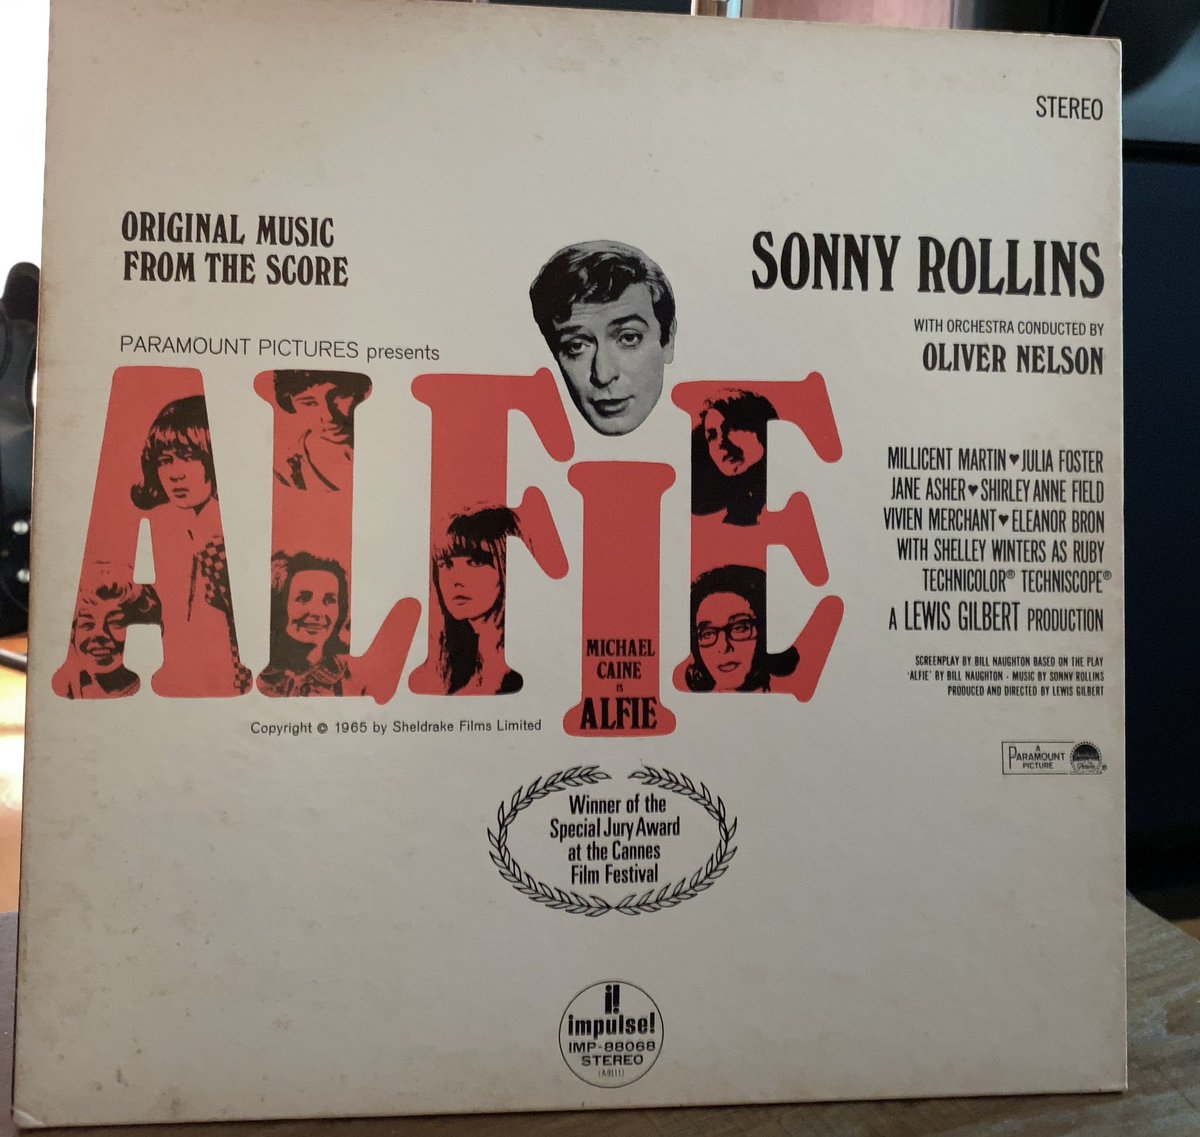 SonnyRollins 
ALFIE 1966年
オリヴァー・ネルソンプロデュースによる同名映画のサントラ盤ですが、充分ジャズ・アルバムで通る快作。
参加メンバーも豪華だし映画音楽という事が奏功してメリハリのある編成はエモーショナル。勿論ロリンズの豪快なブローも楽しめる。
#ジャズ名盤